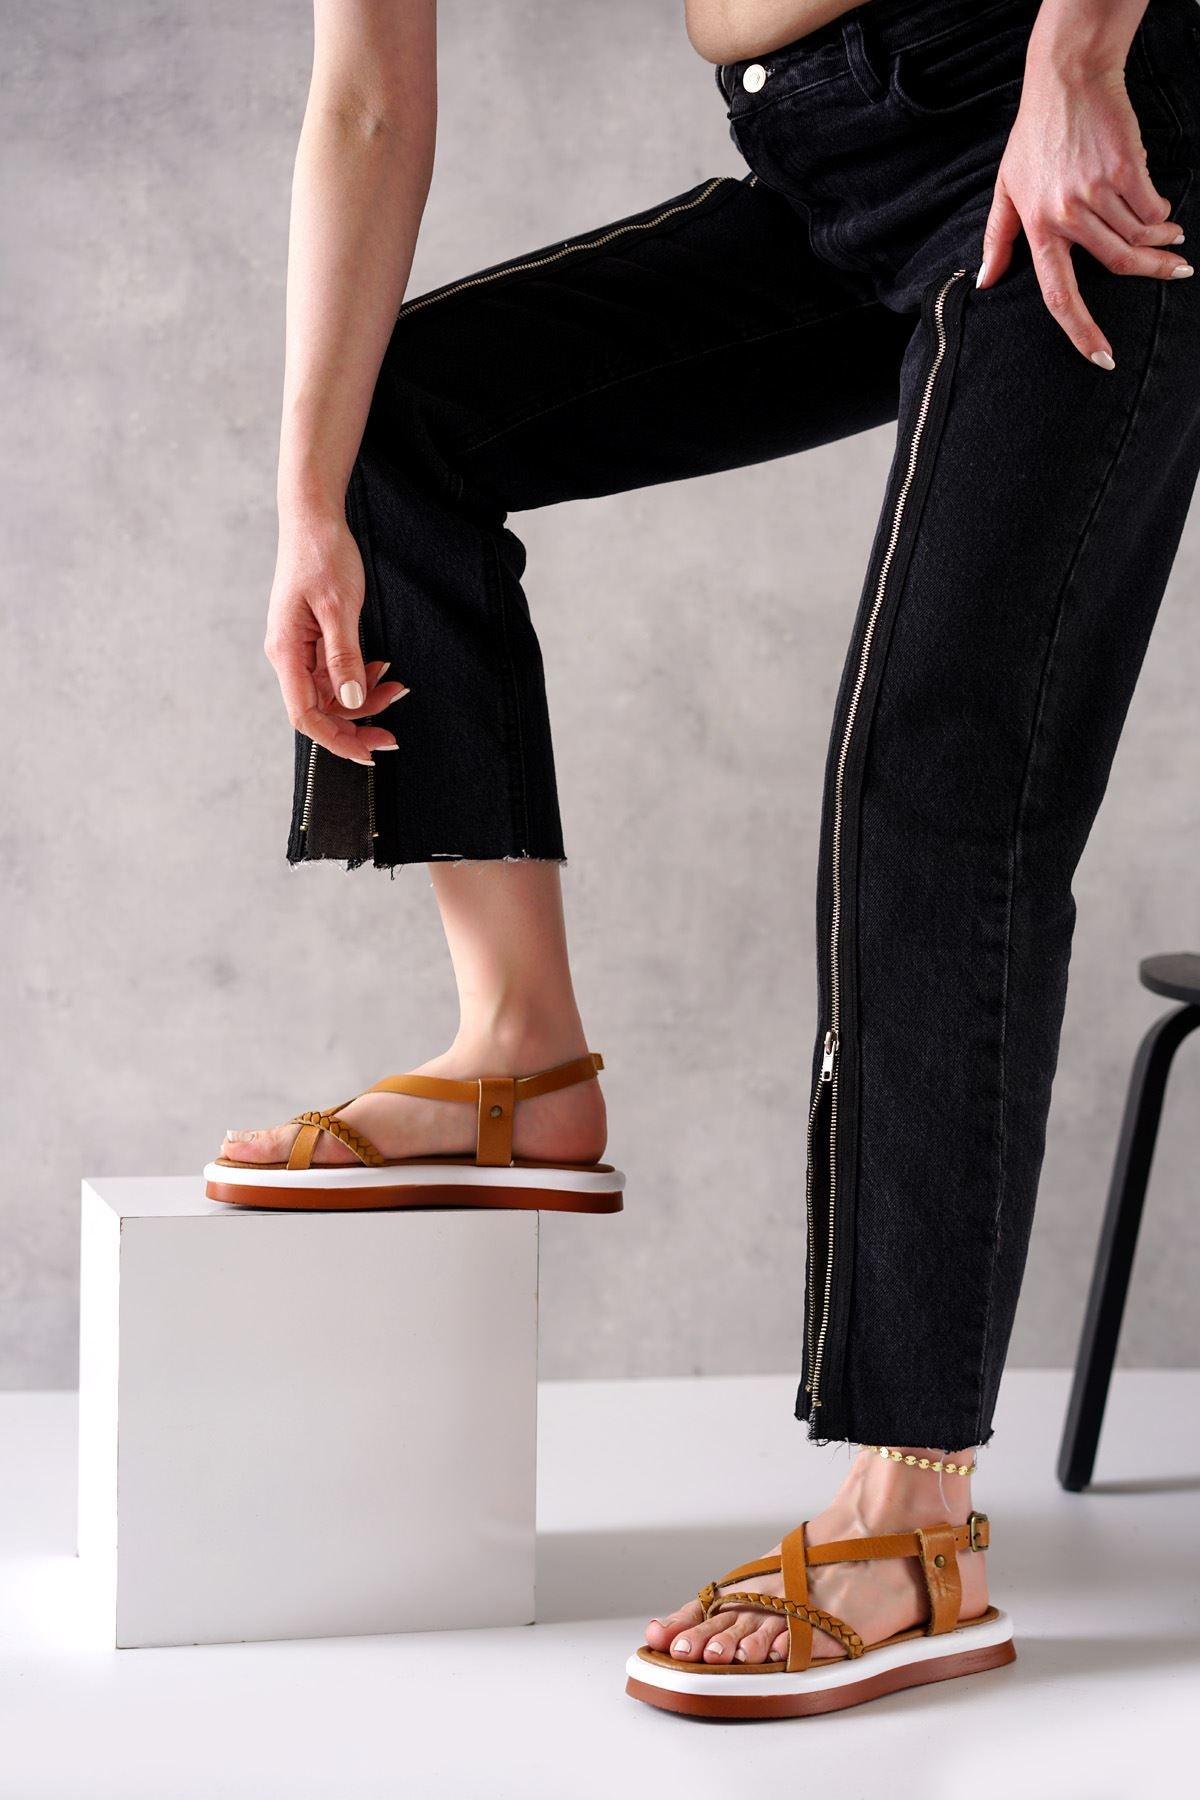 Alaçatı Genuine Leather Brown Women's Sandals - STREET MODE ™